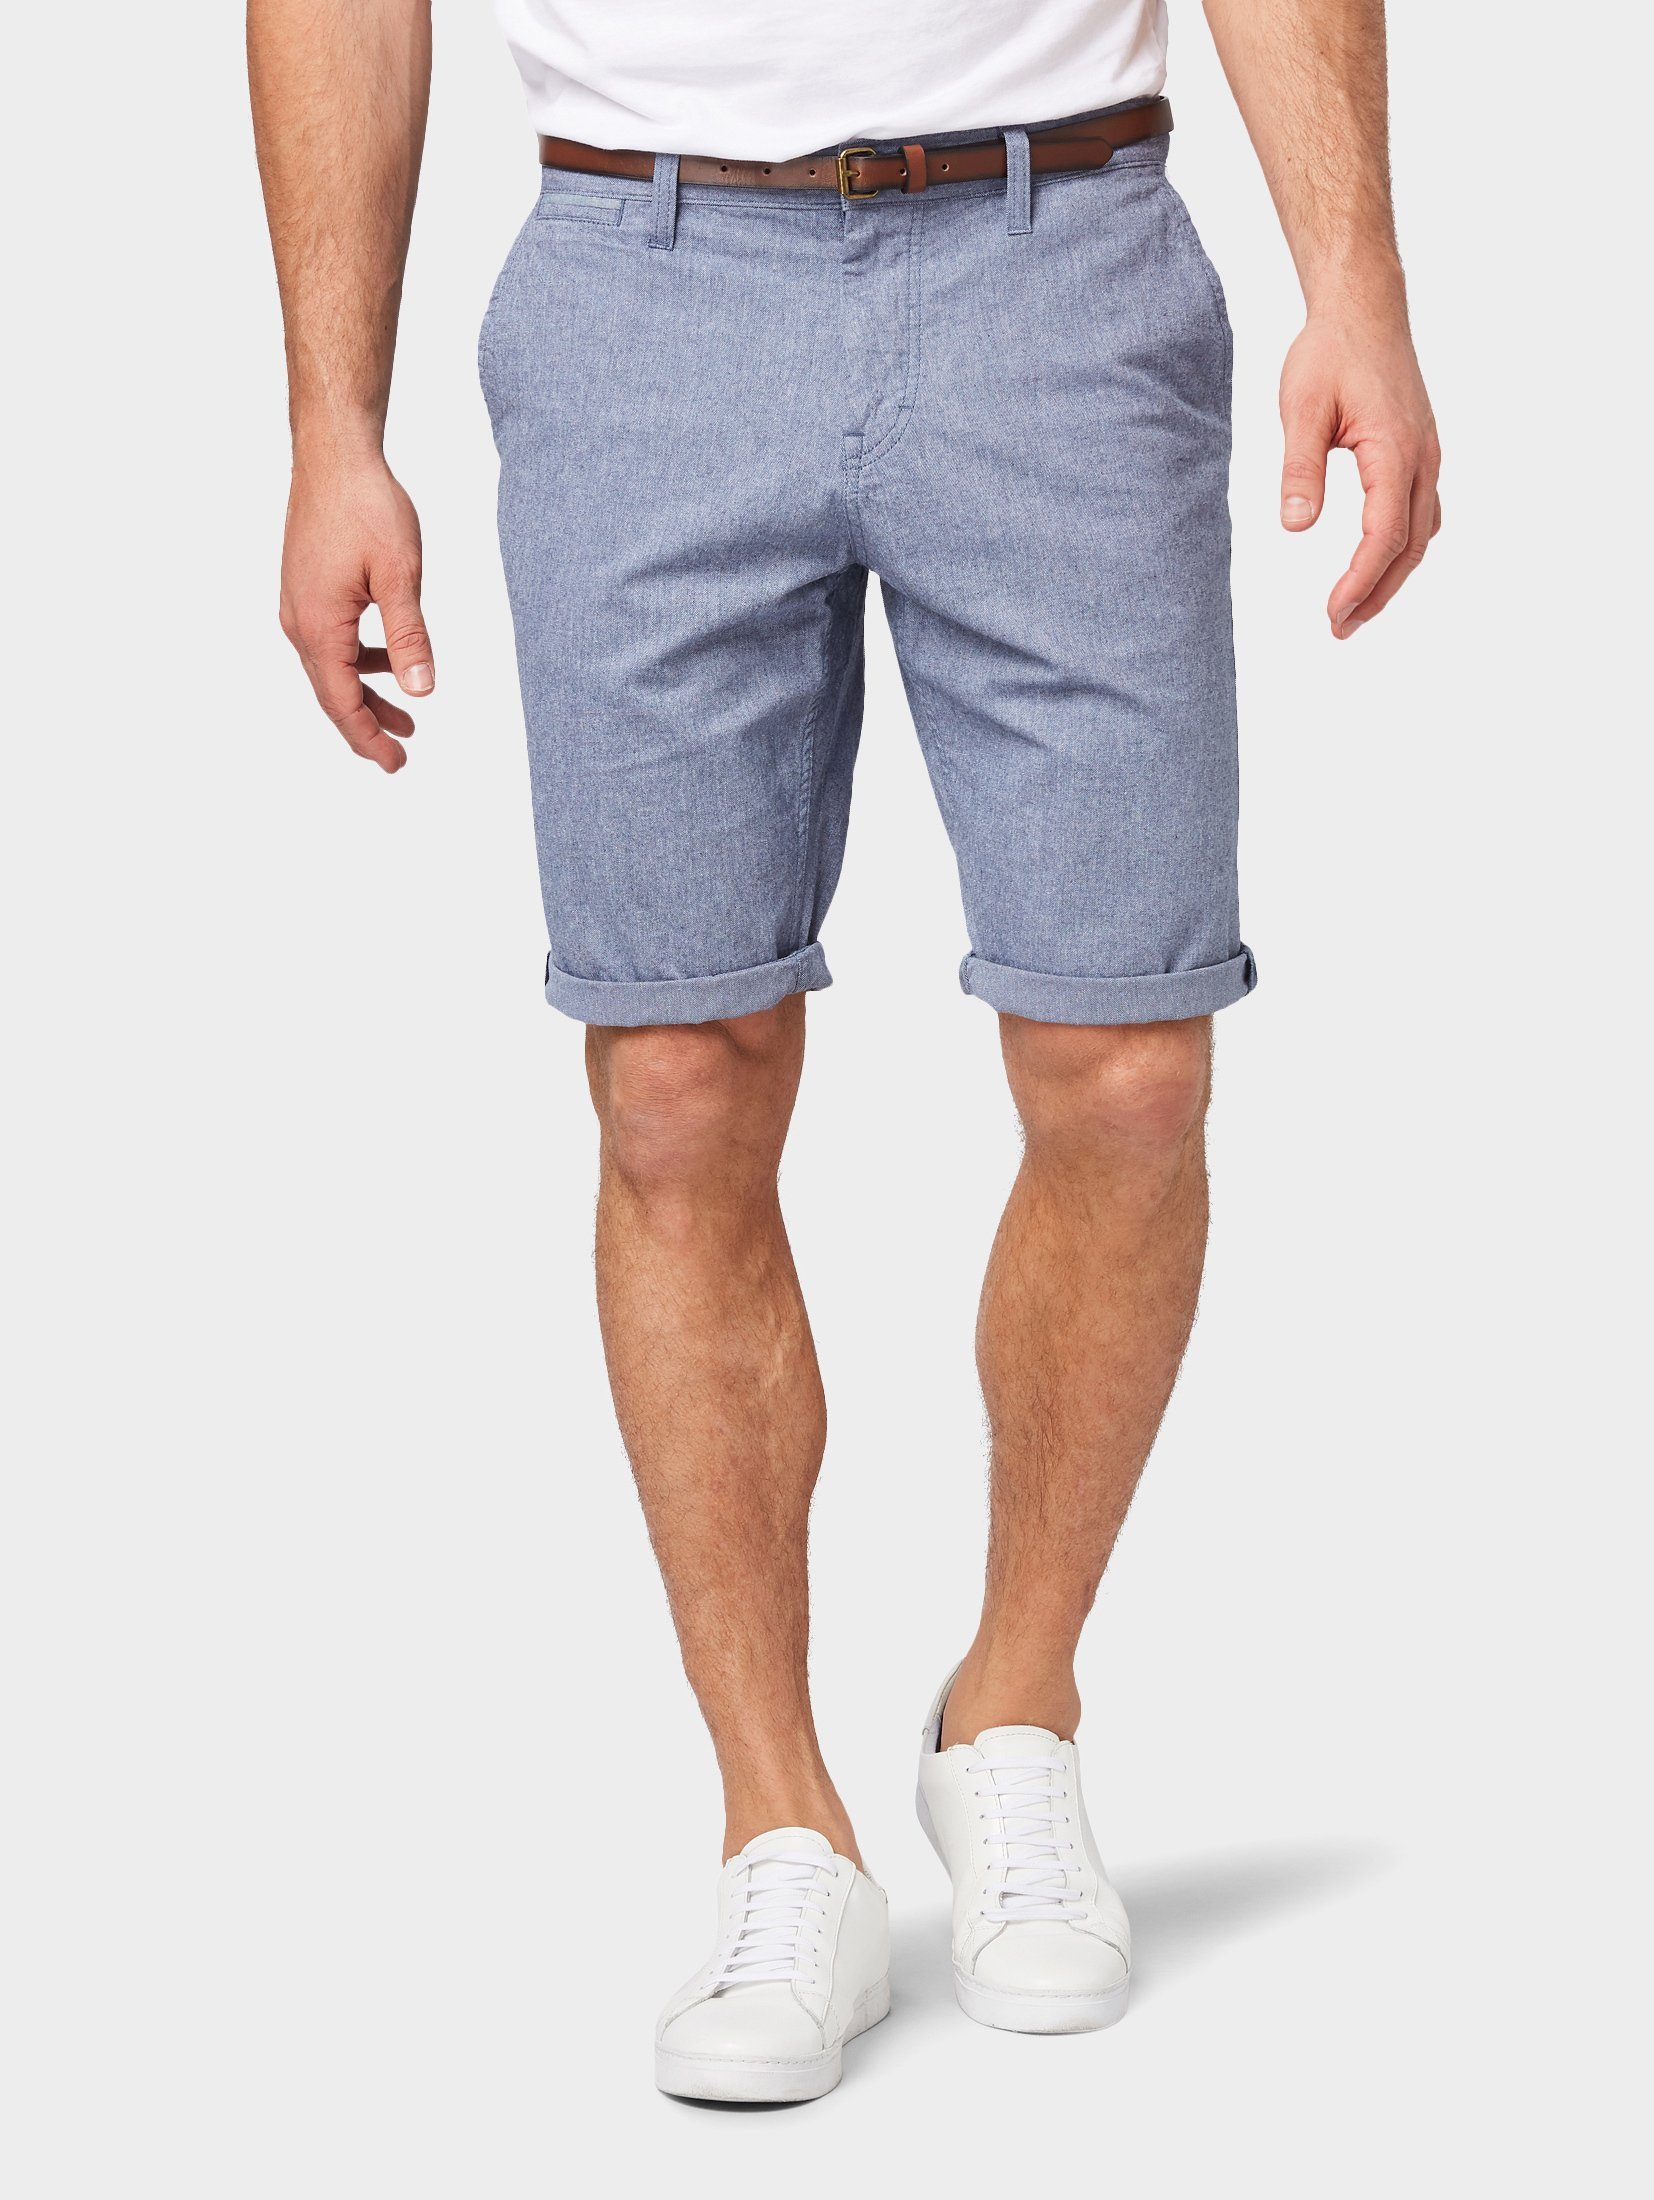 Штаны под шорты. Шорты - бермуды Herren. Шорты Bermuda мужские. Валберис шорты мужские. Tom Tailor Slim Chino shorts.